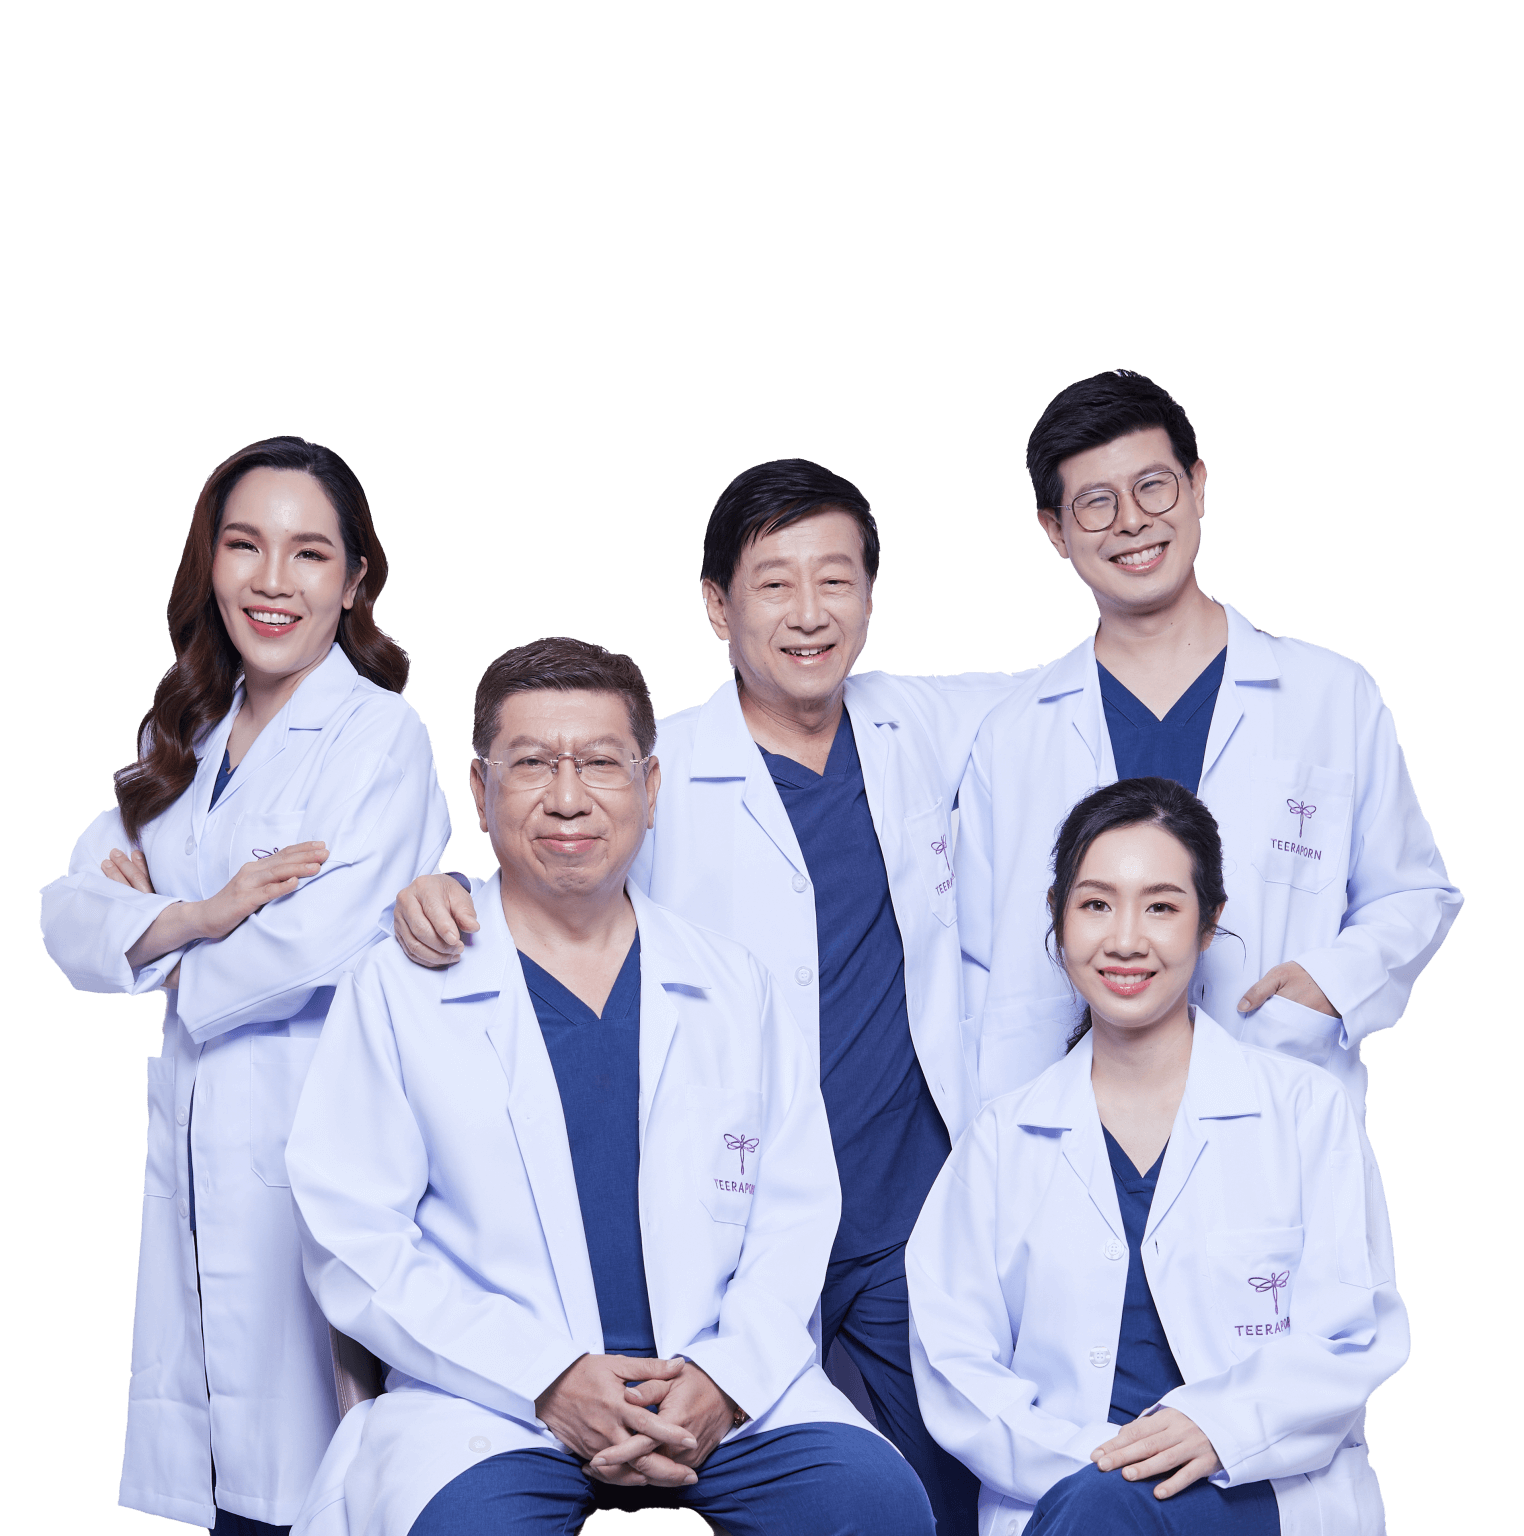 Doctor Team 77